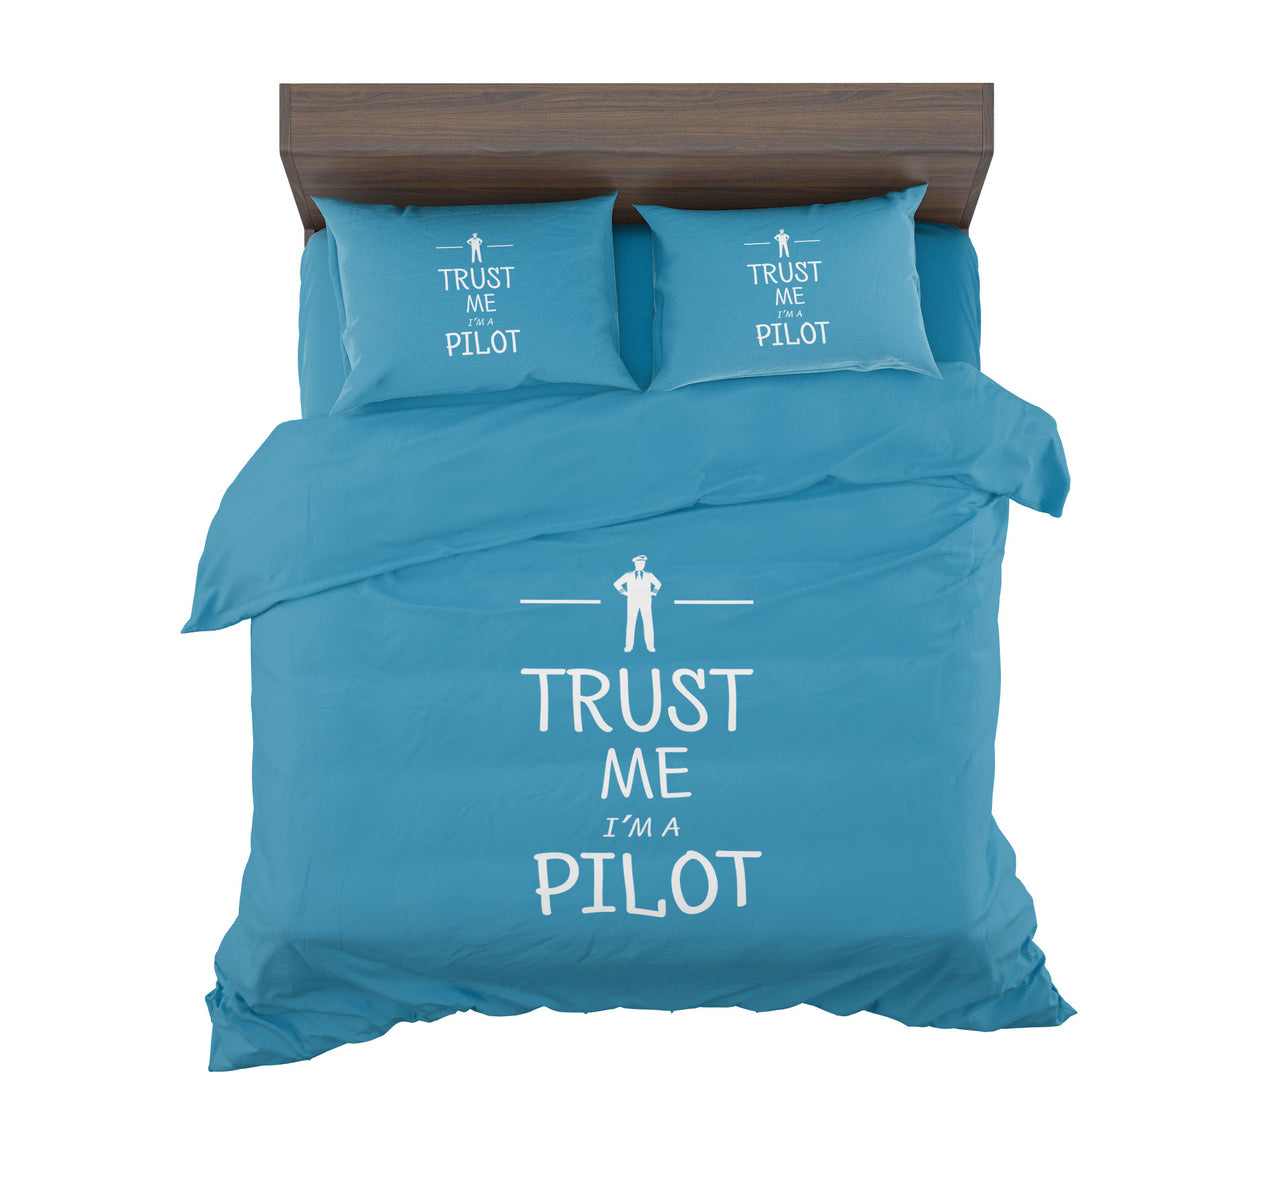 Trust Me I'm a Pilot Designed Bedding Sets